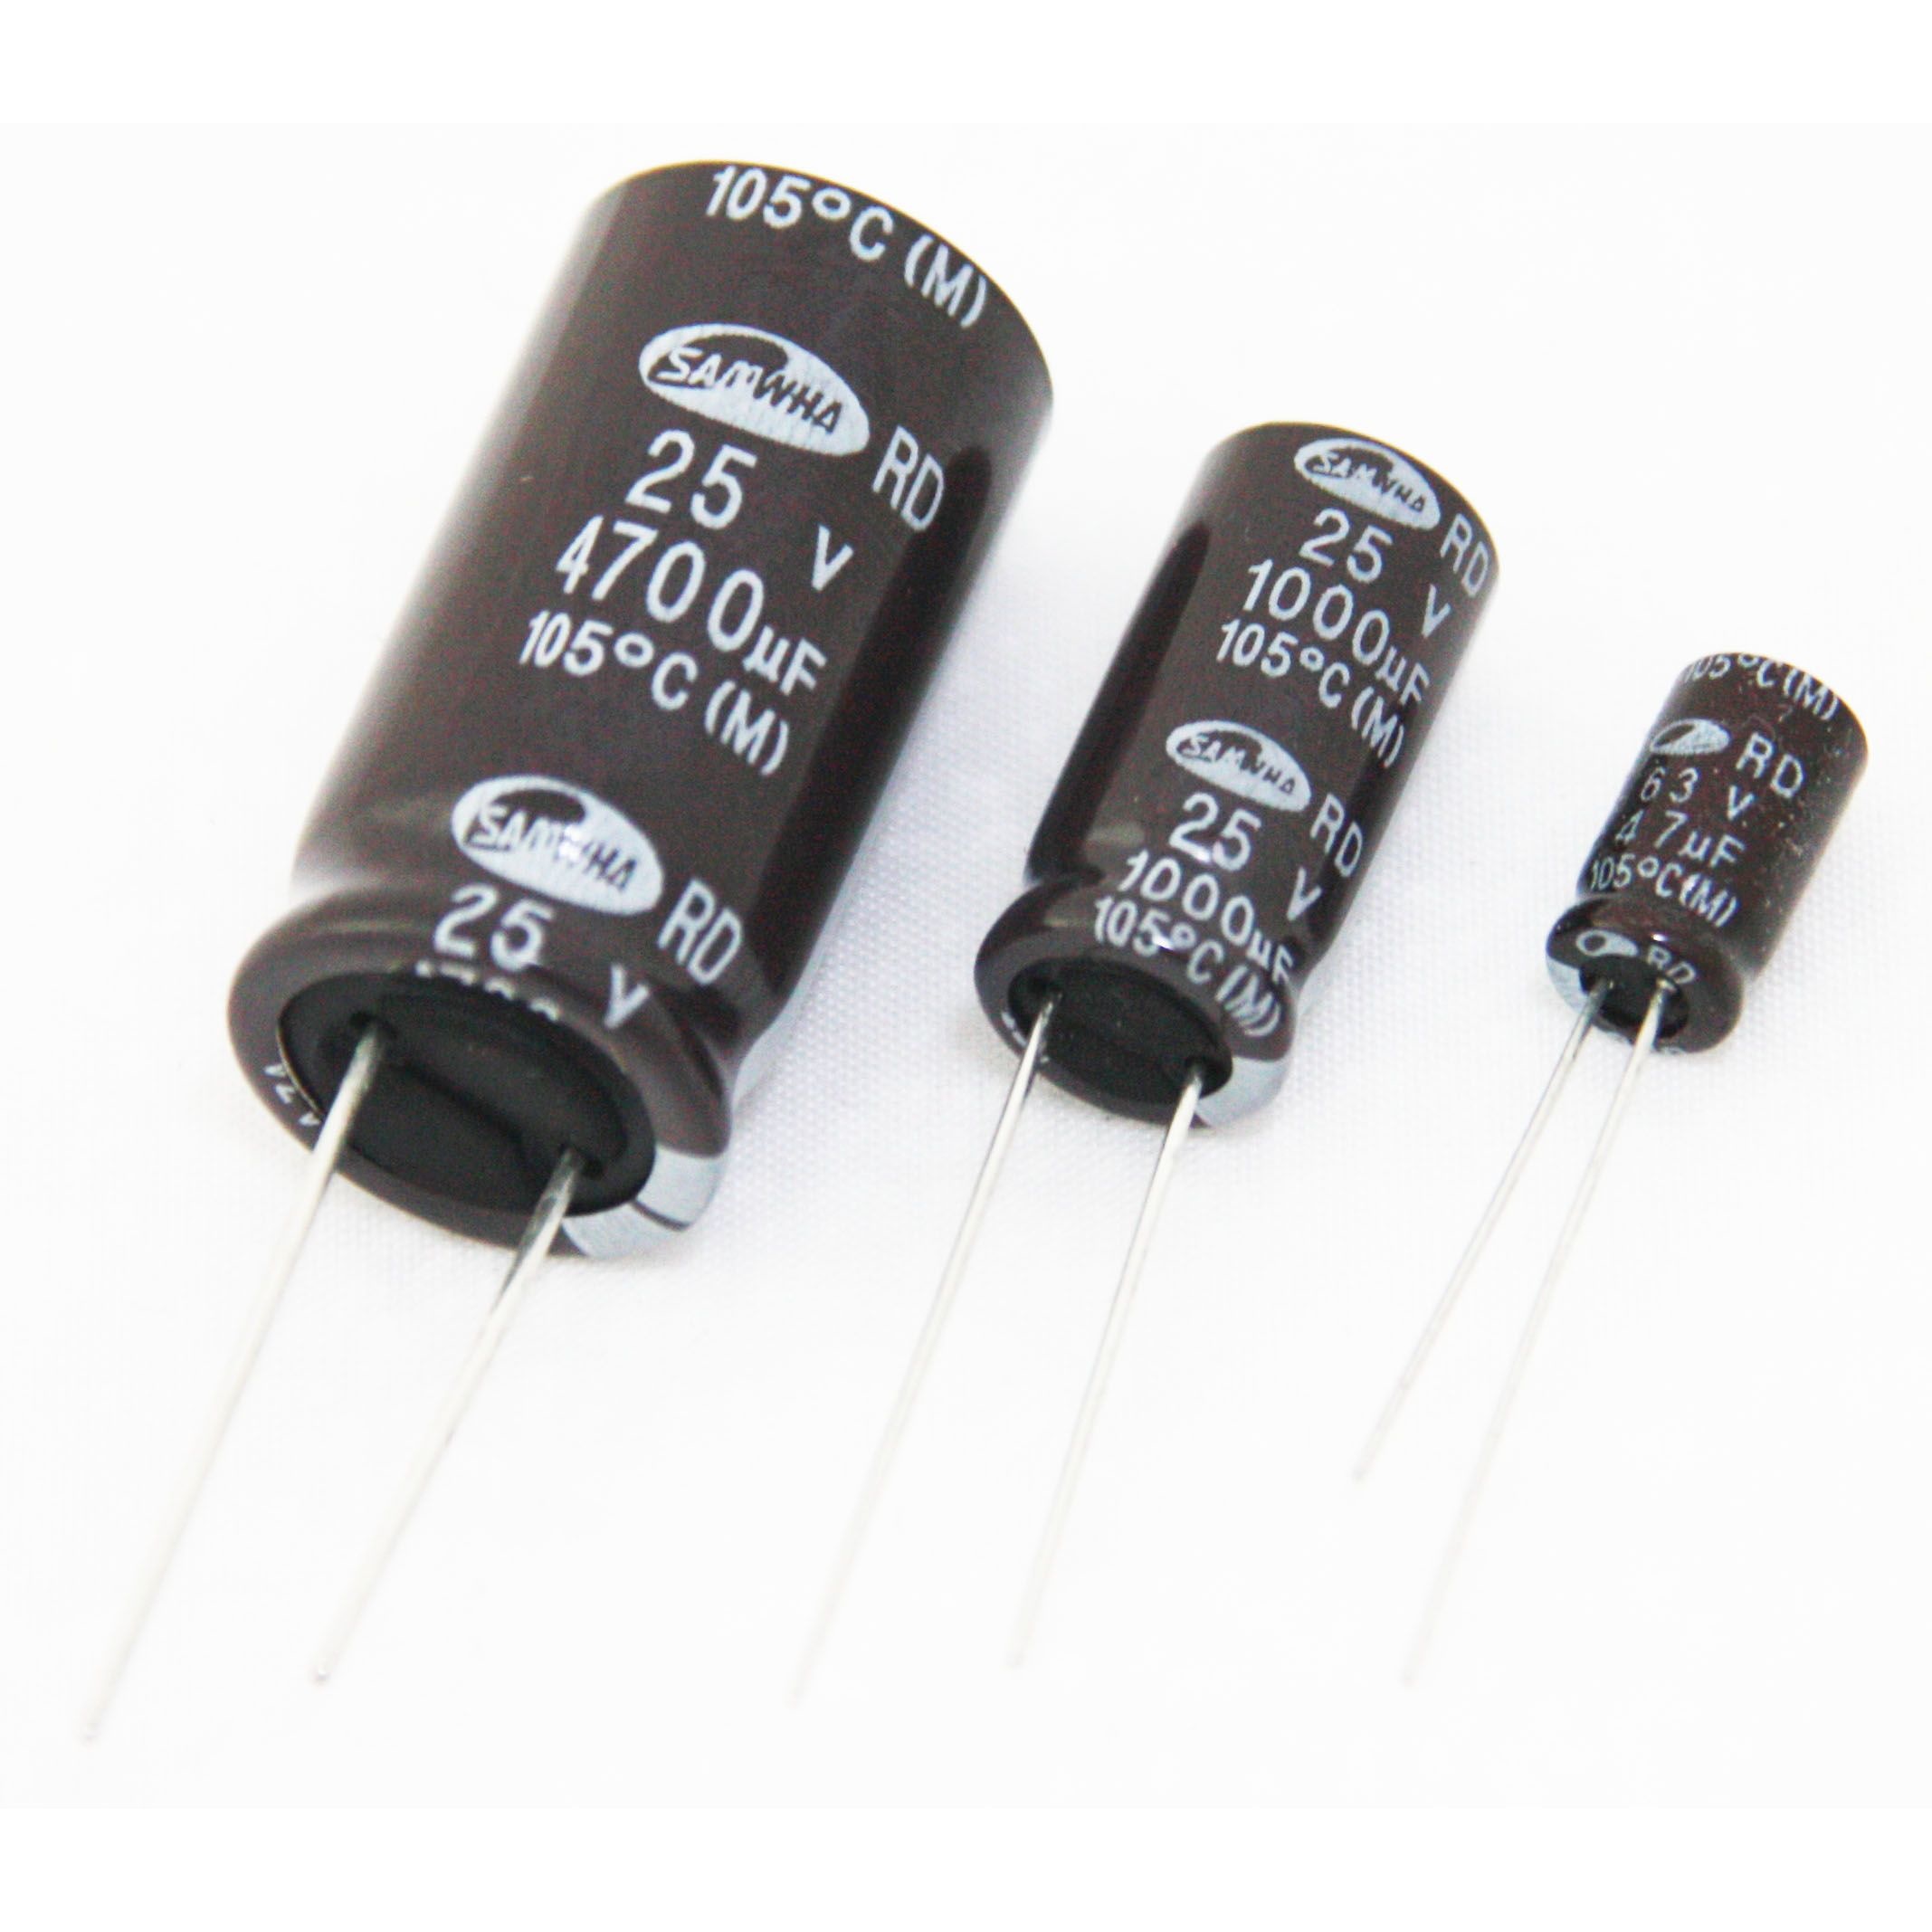 Electrolytic capacitor 105° 2200uF-35V